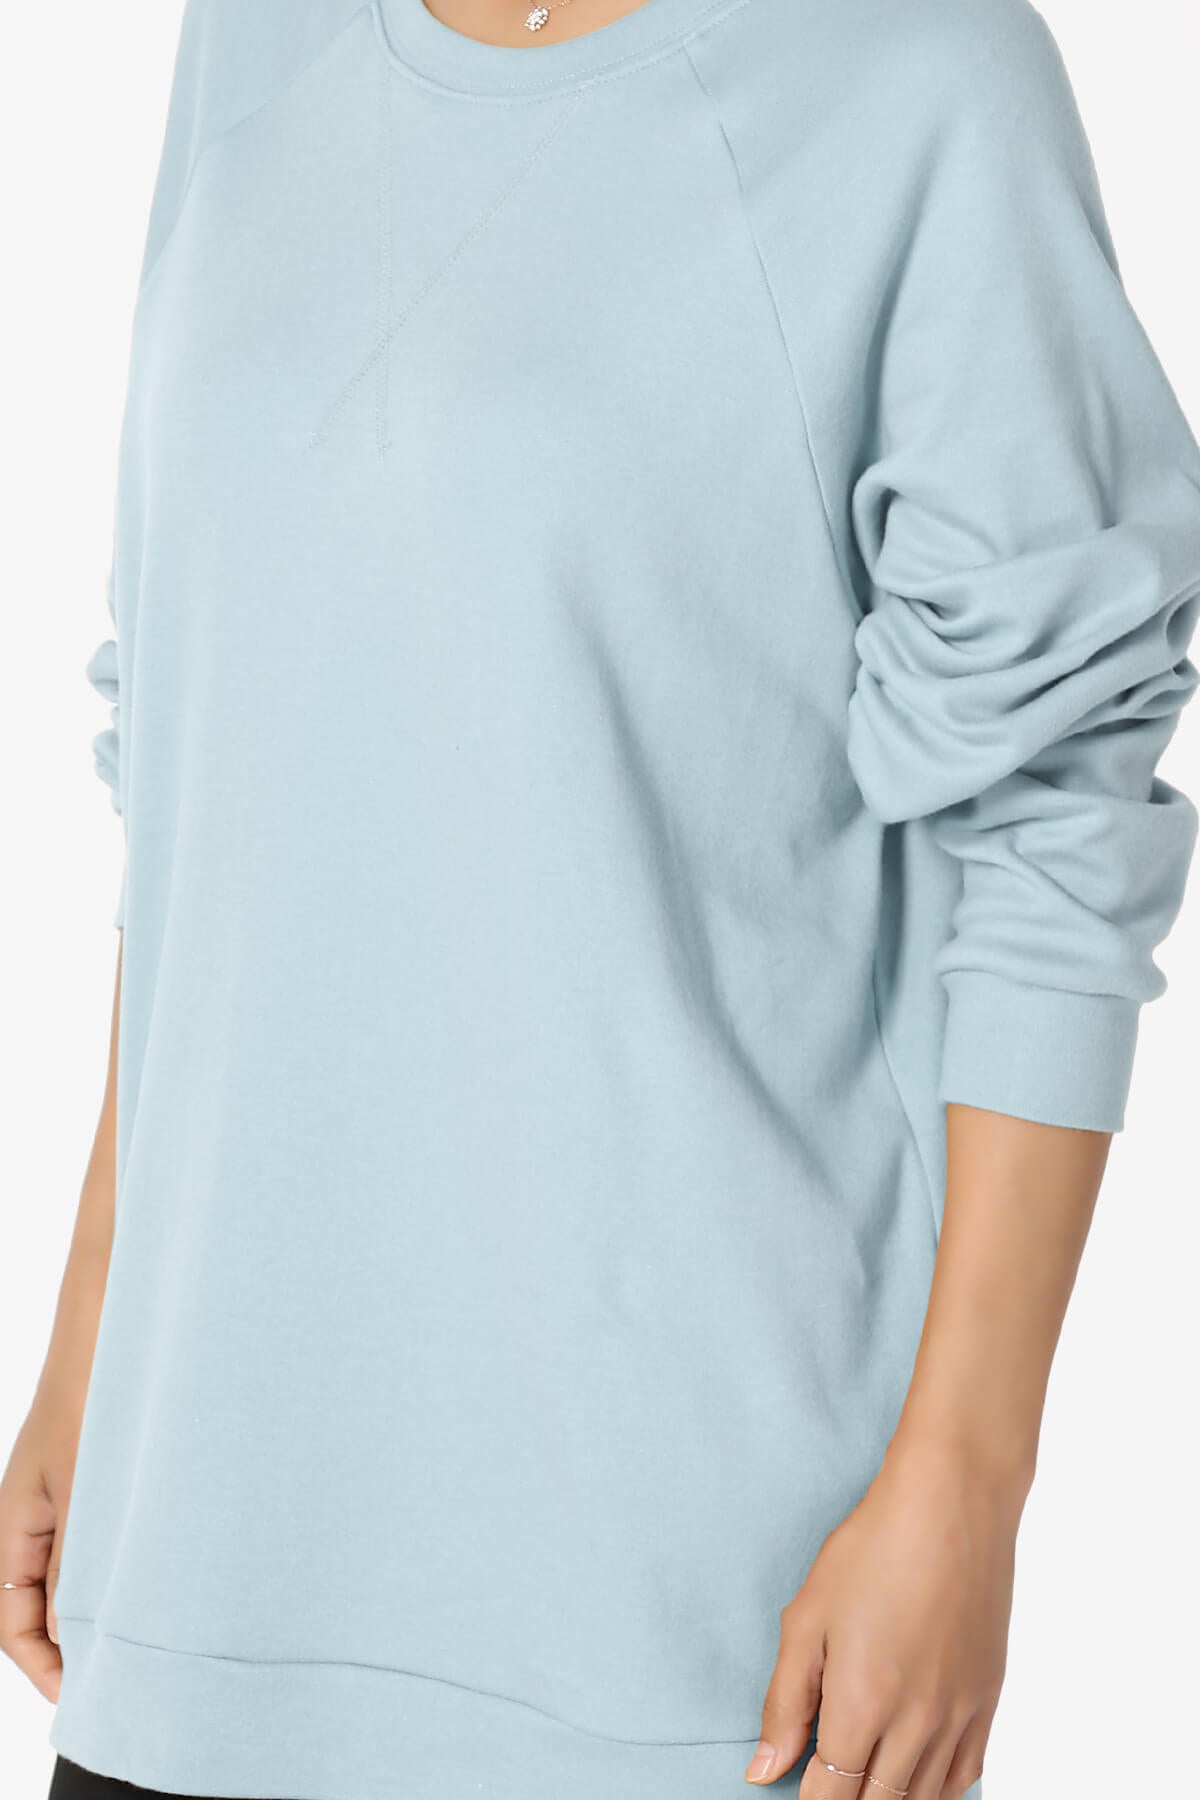 Carlene Cotton Raglan Sleeve Pullover Top ASH BLUE_5